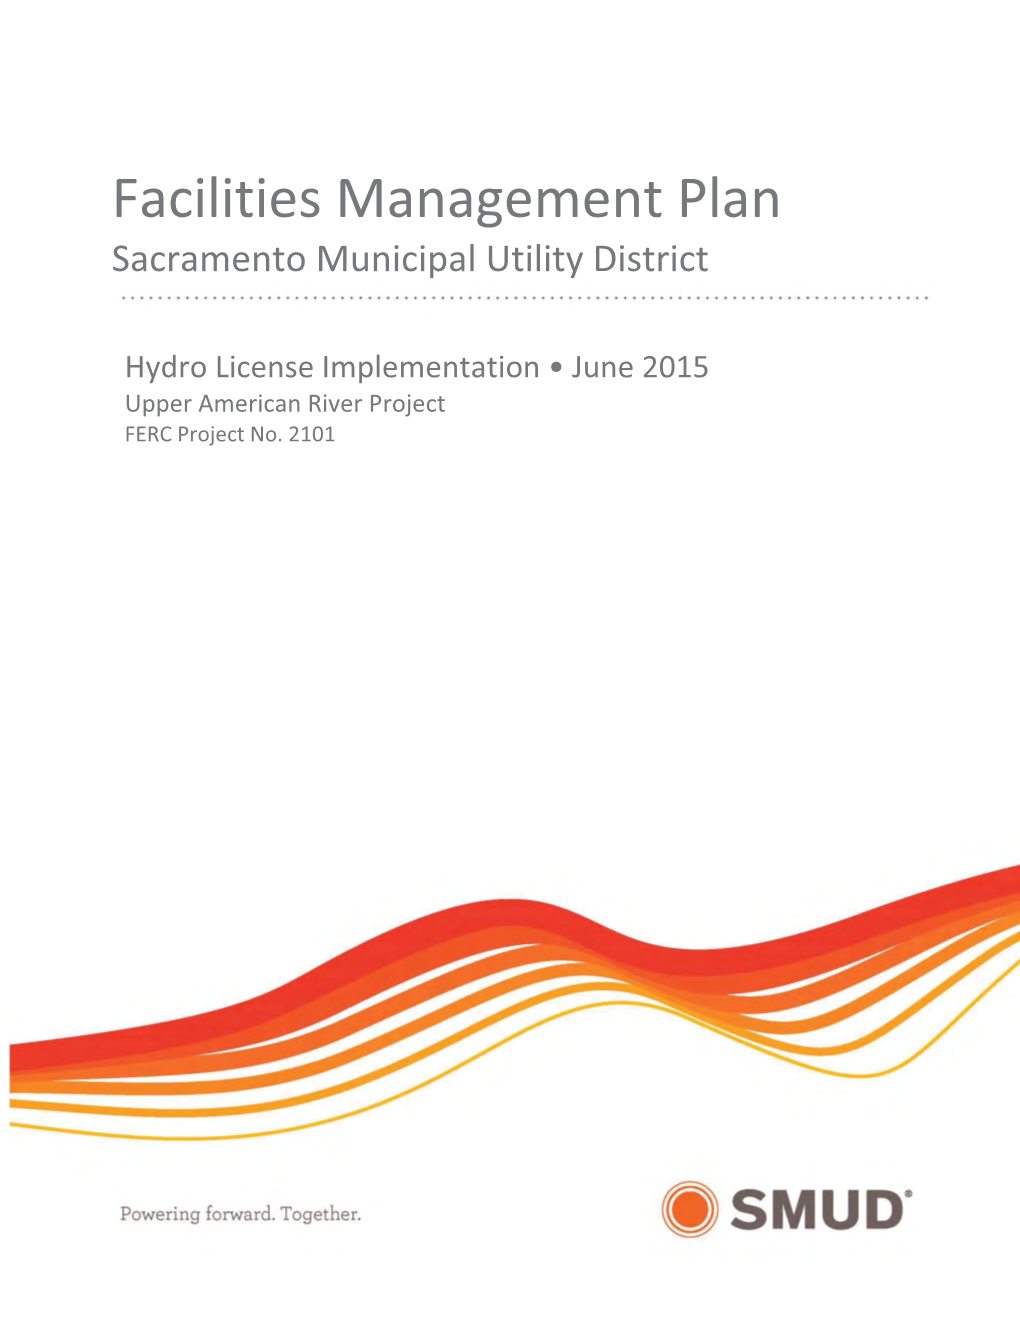 FERC 2101 Facilities Management Plan